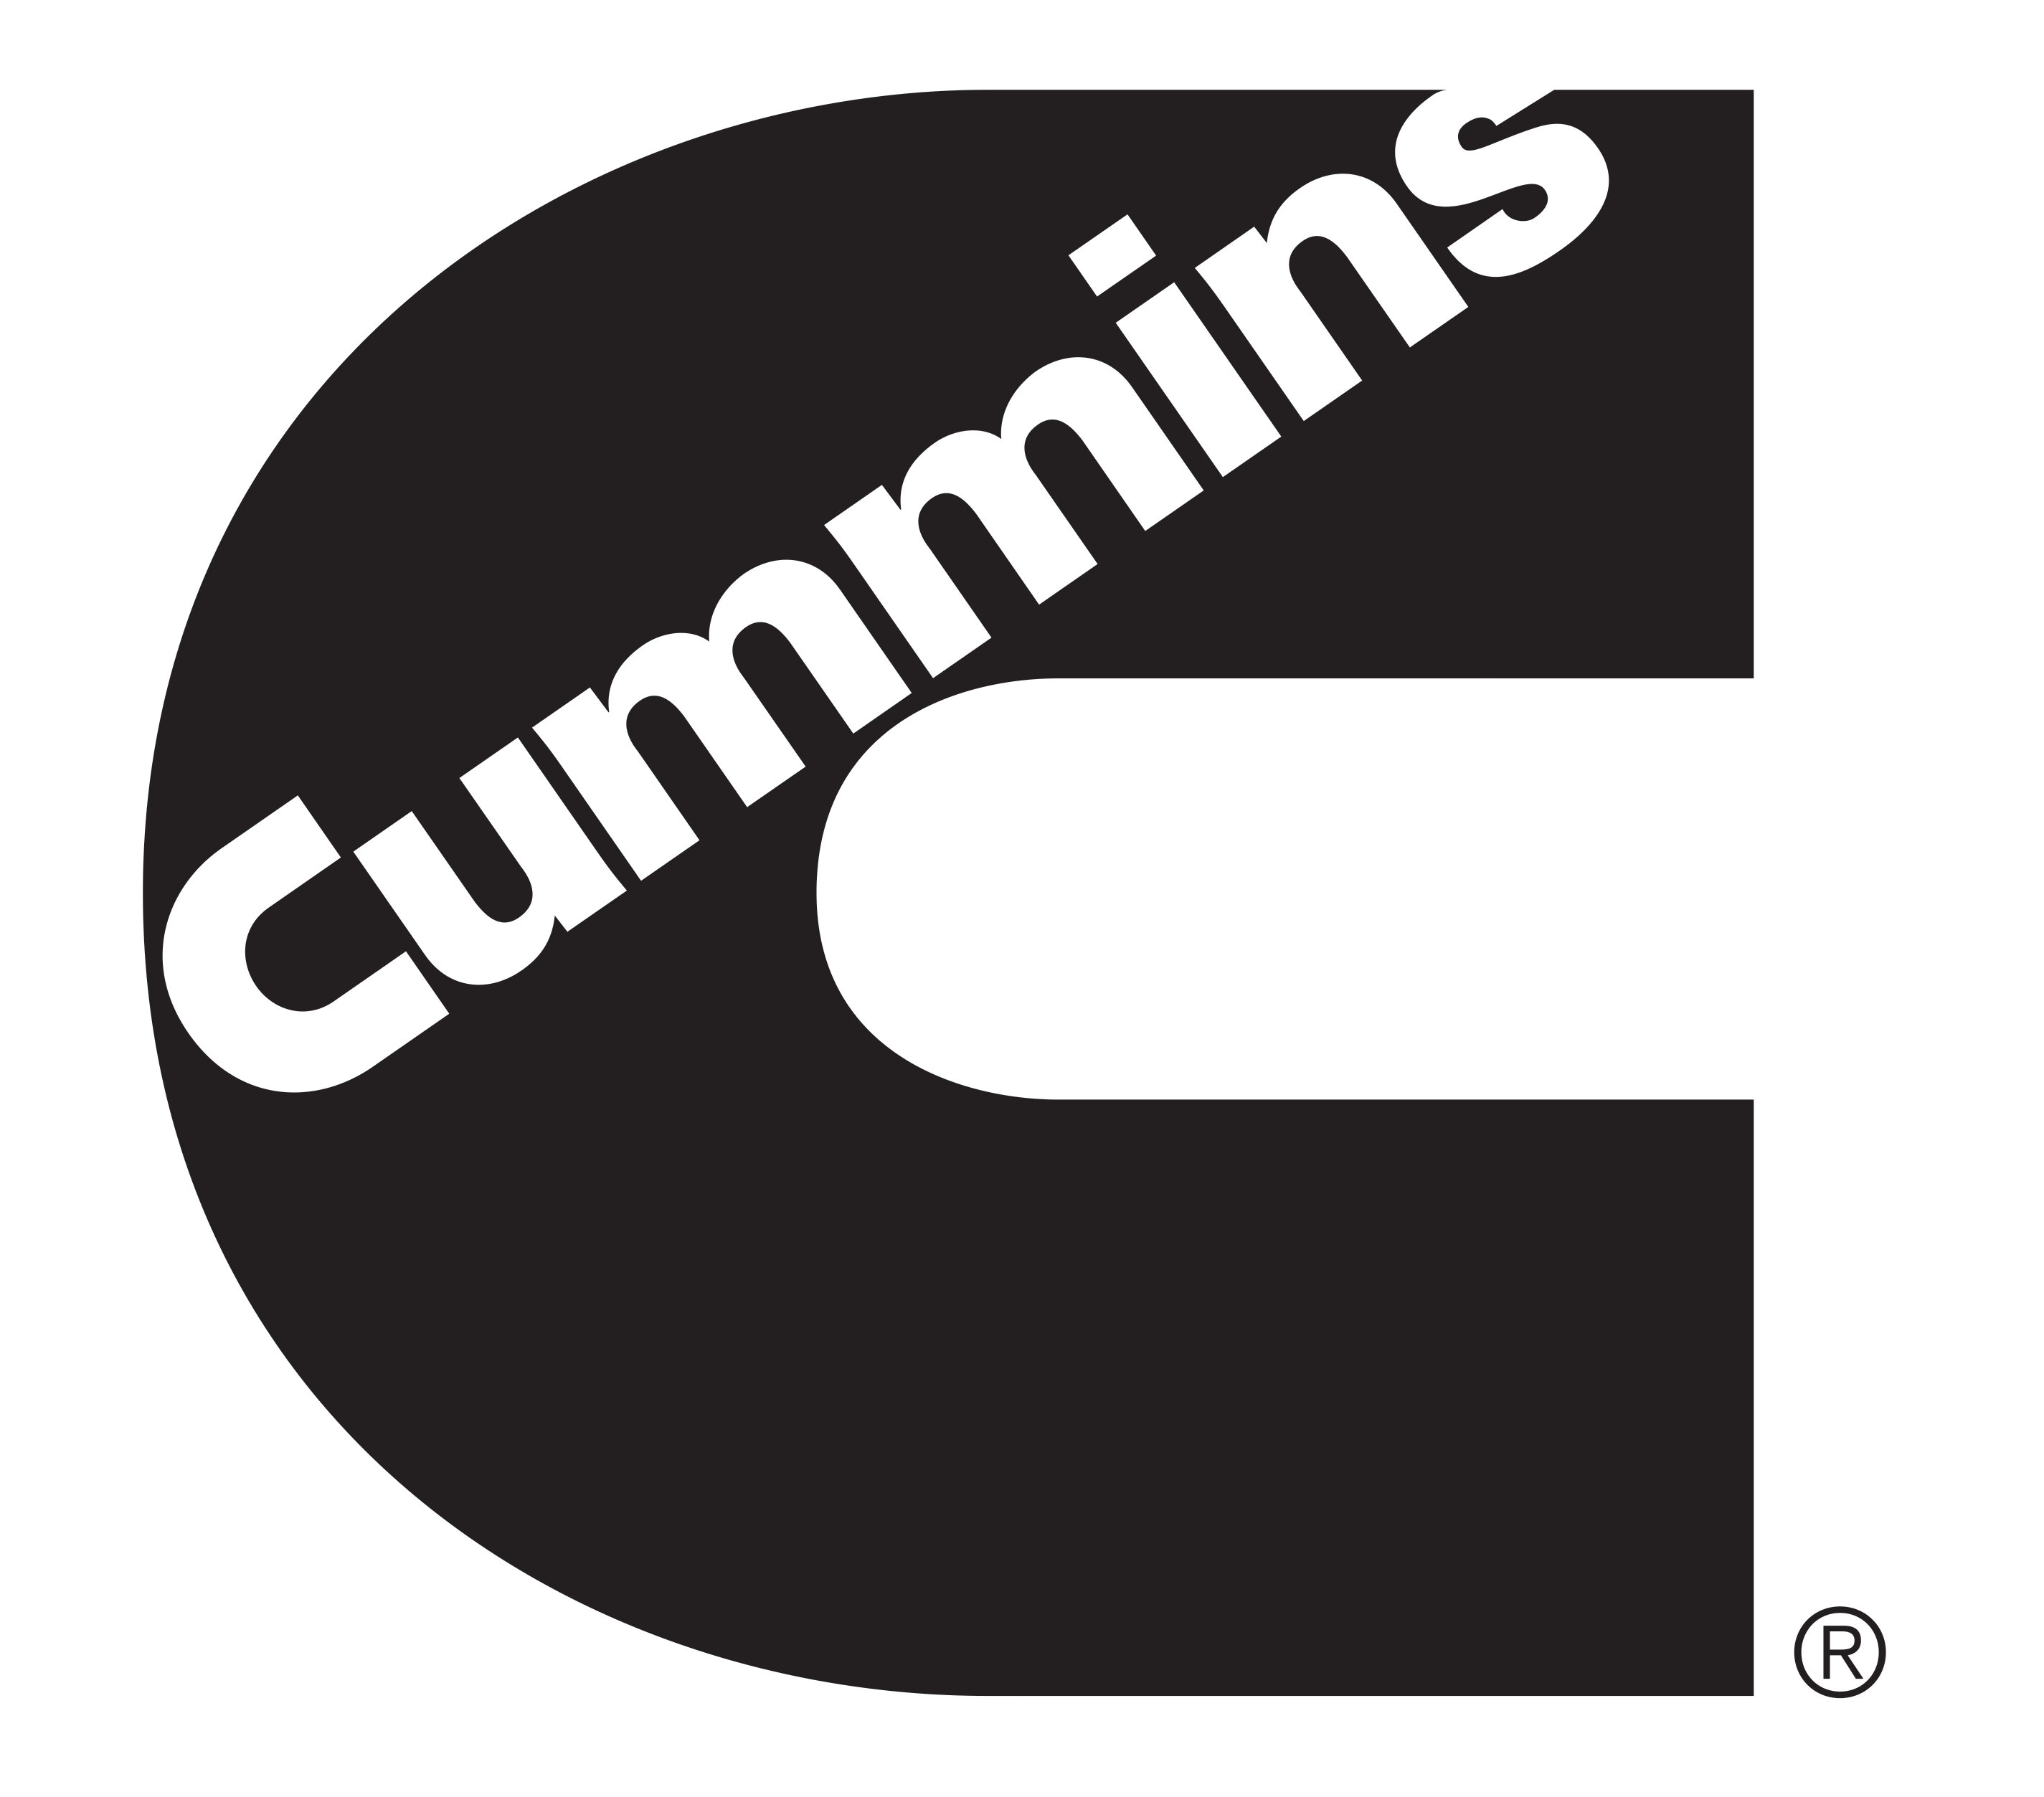 Consideration Logo - Cummins Logo, Cummins Symbol, Meaning, History and Evolution